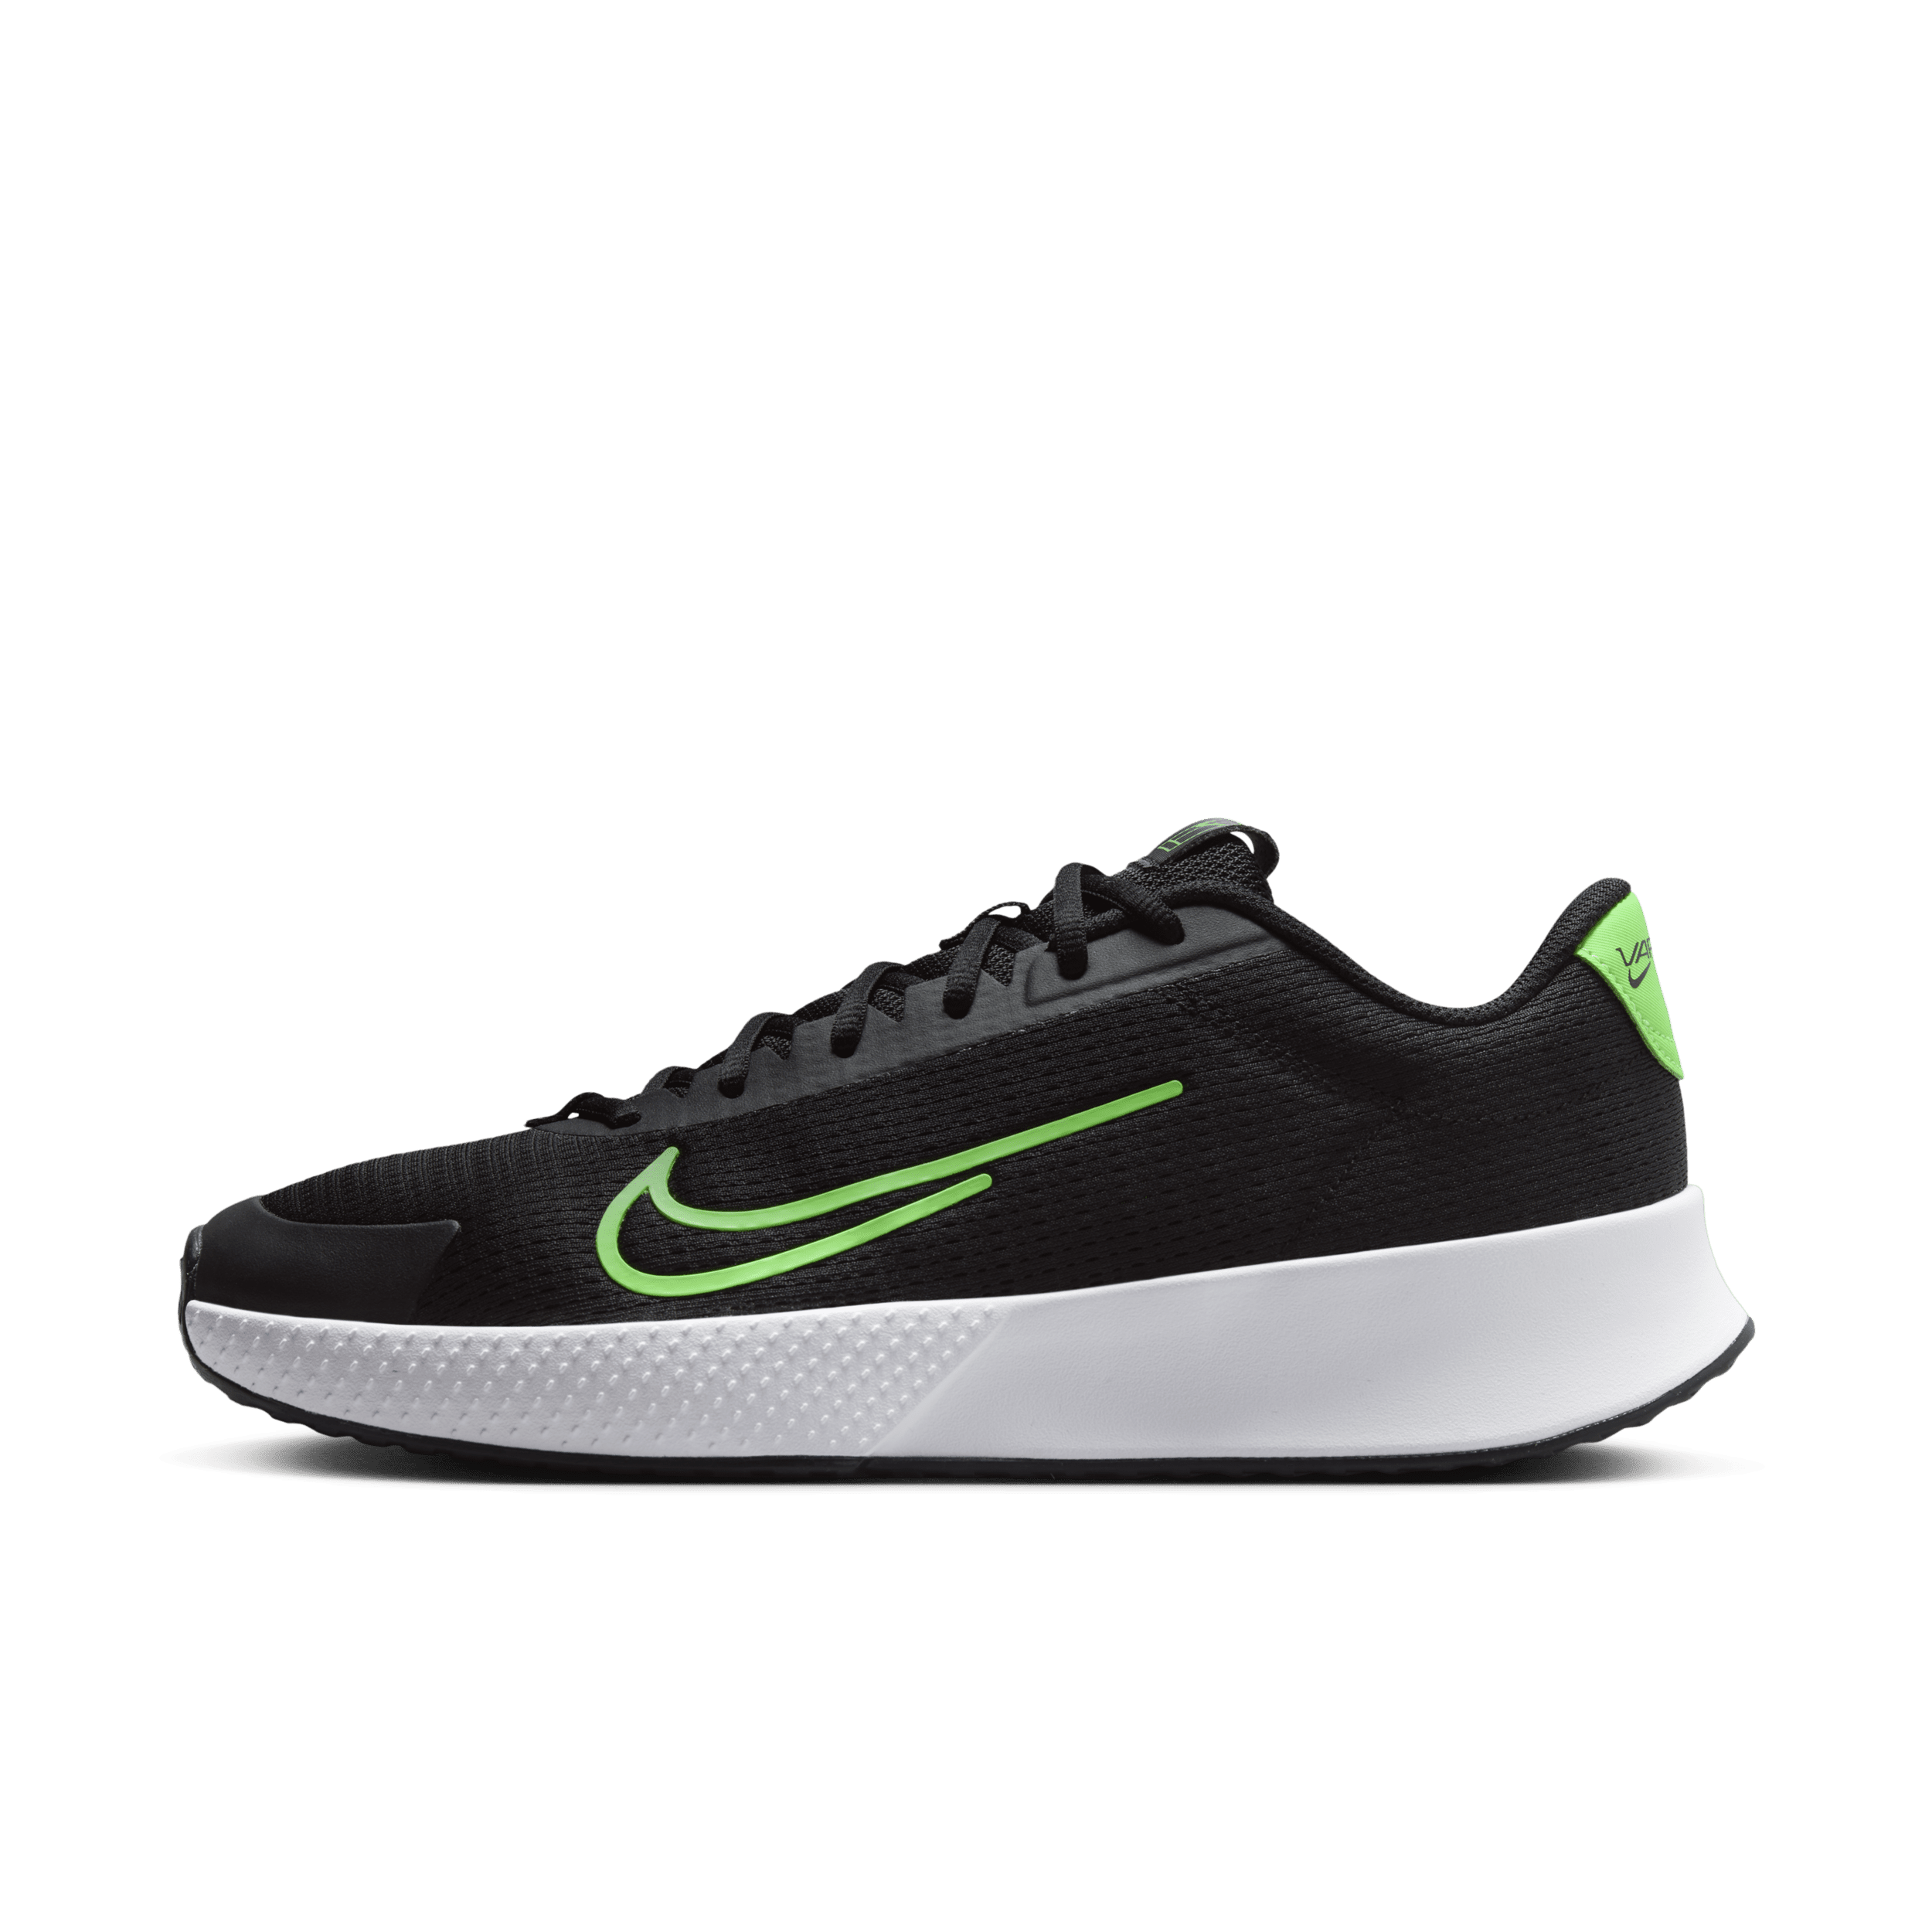 NikeCourt Vapor Lite 2-hardcourt-tennissko til mænd - sort